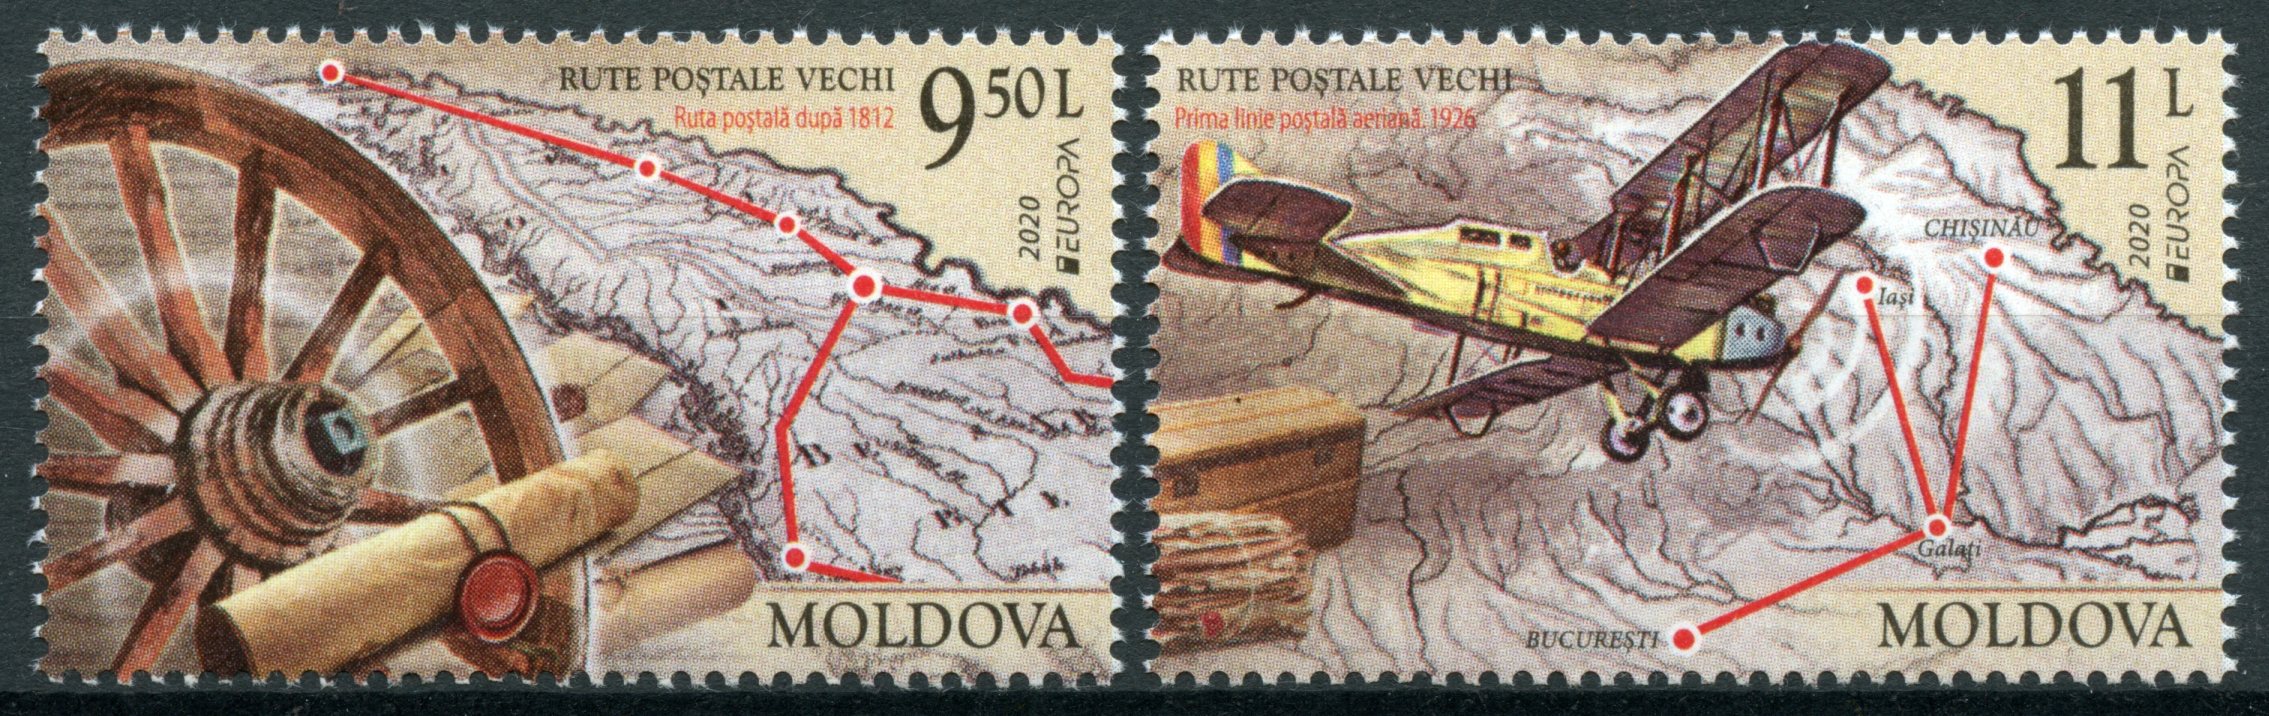 Moldova 2020 MNH Europa Stamps Ancient Postal Routes Services Aircraft 2v Set